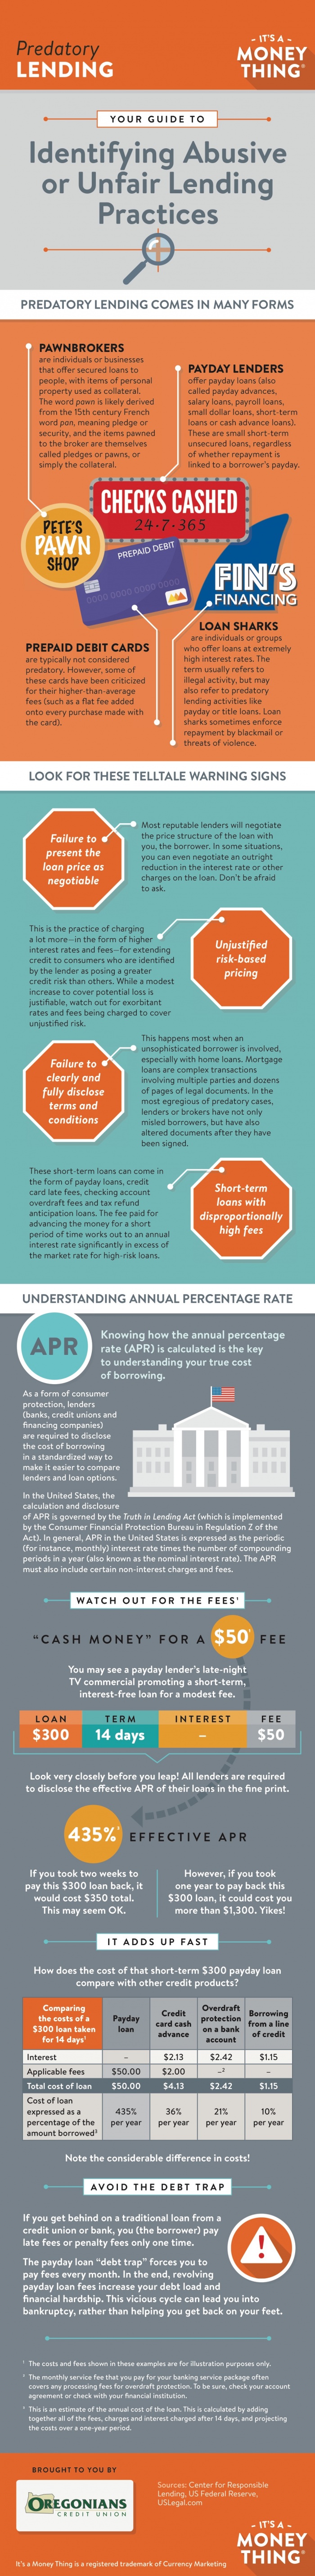 Predatory Lending Infographic